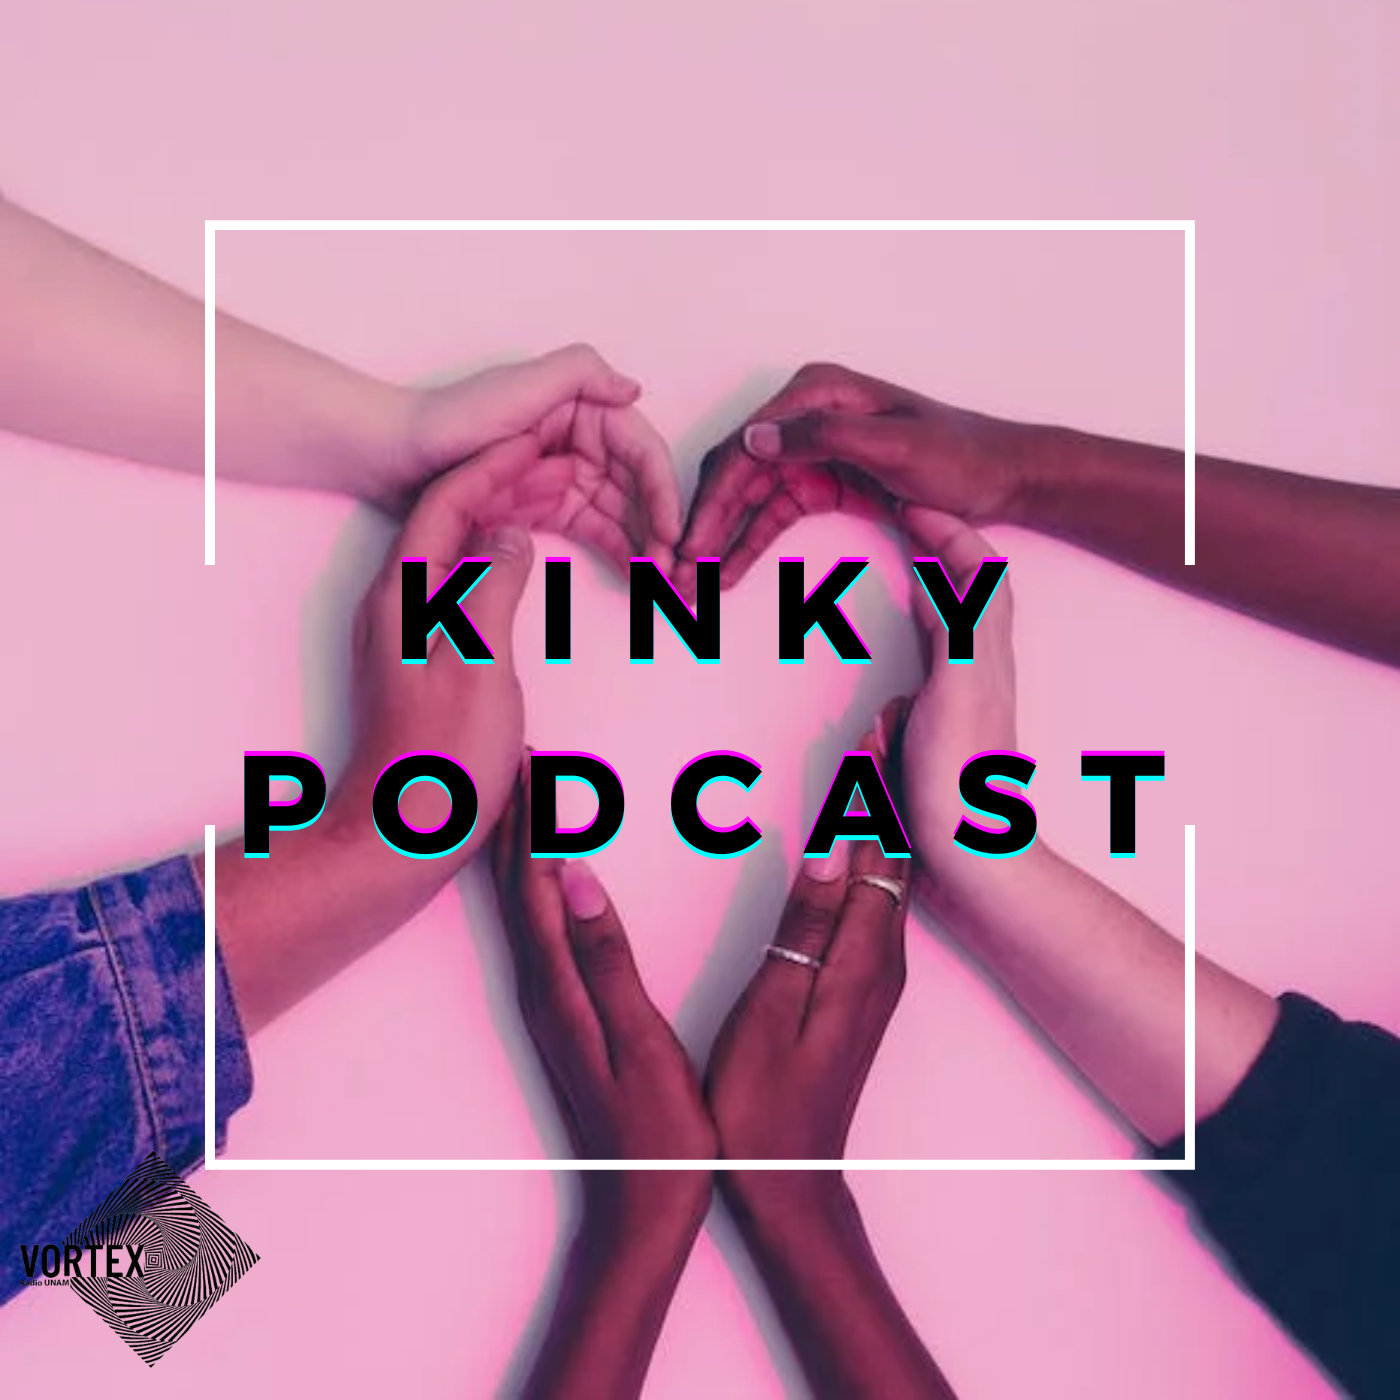 Kinky Podcast